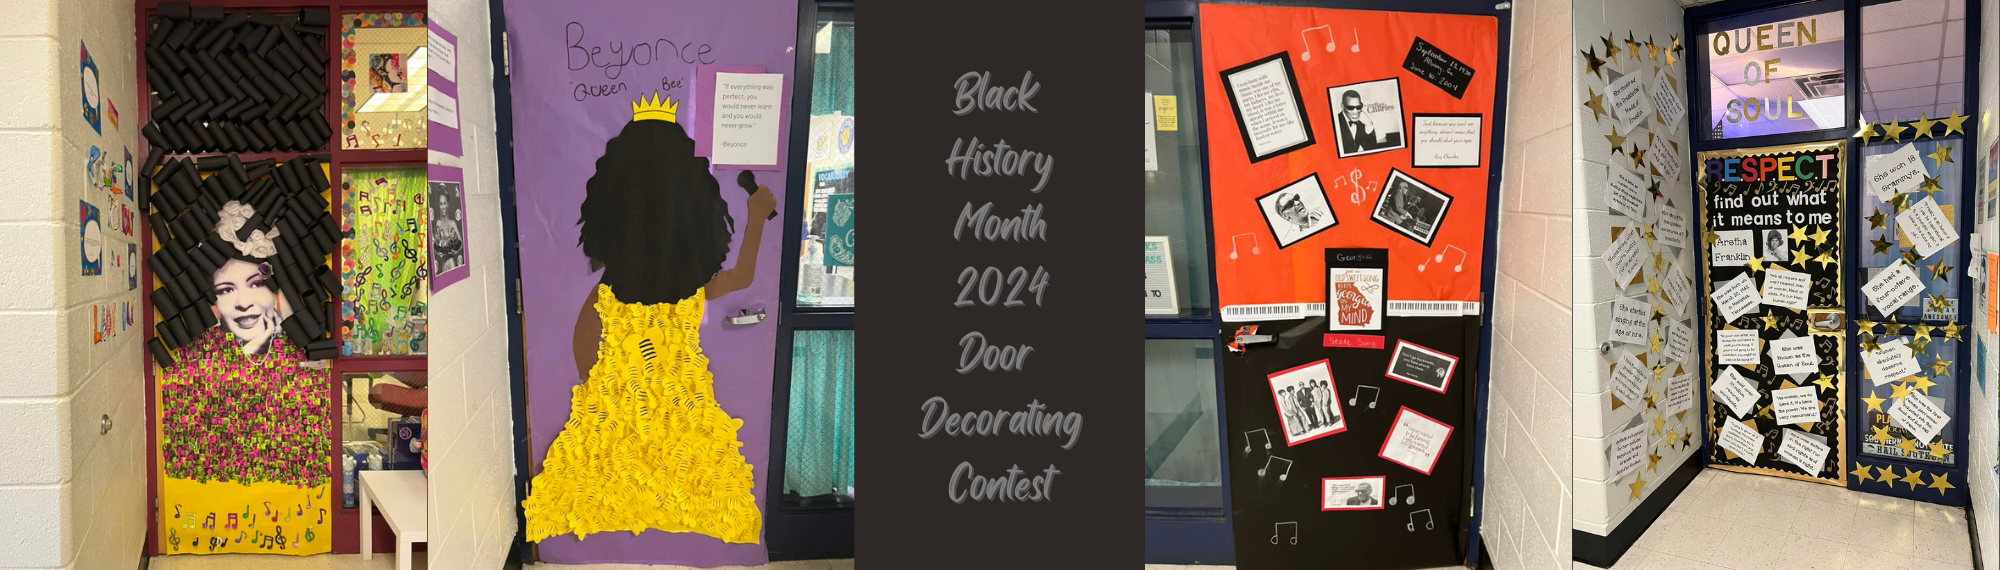 Black History Month Doors 2024